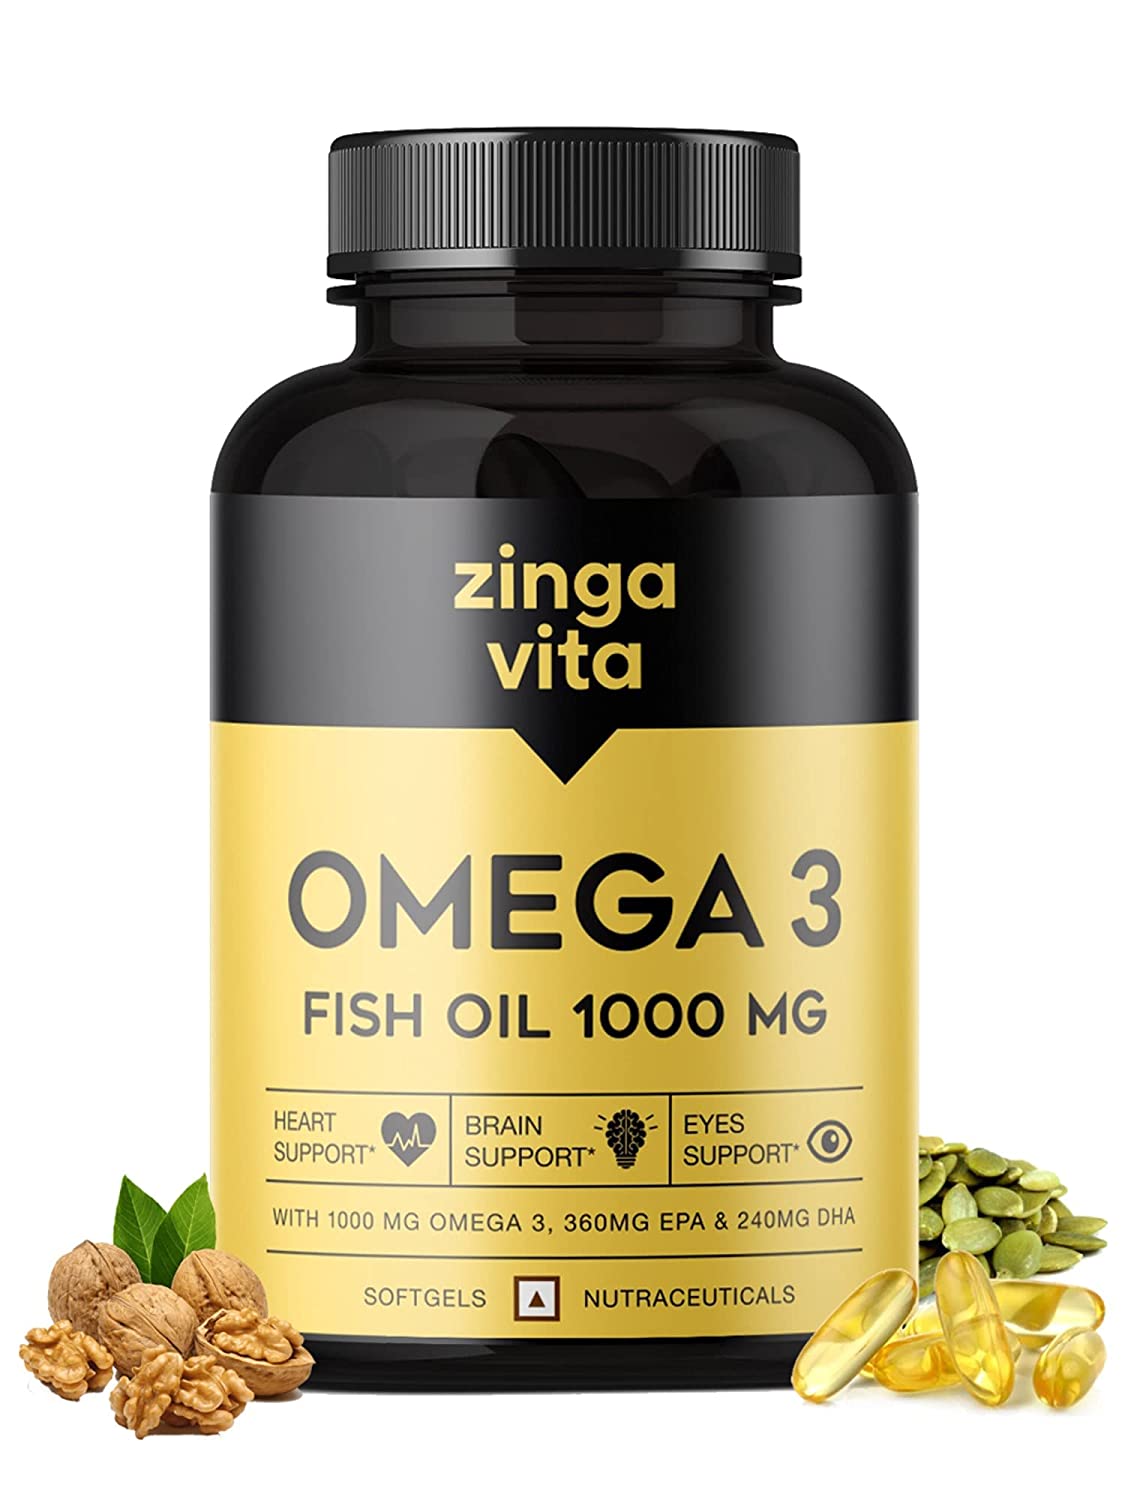 Zingavita Omega 3 Fish Oil Image